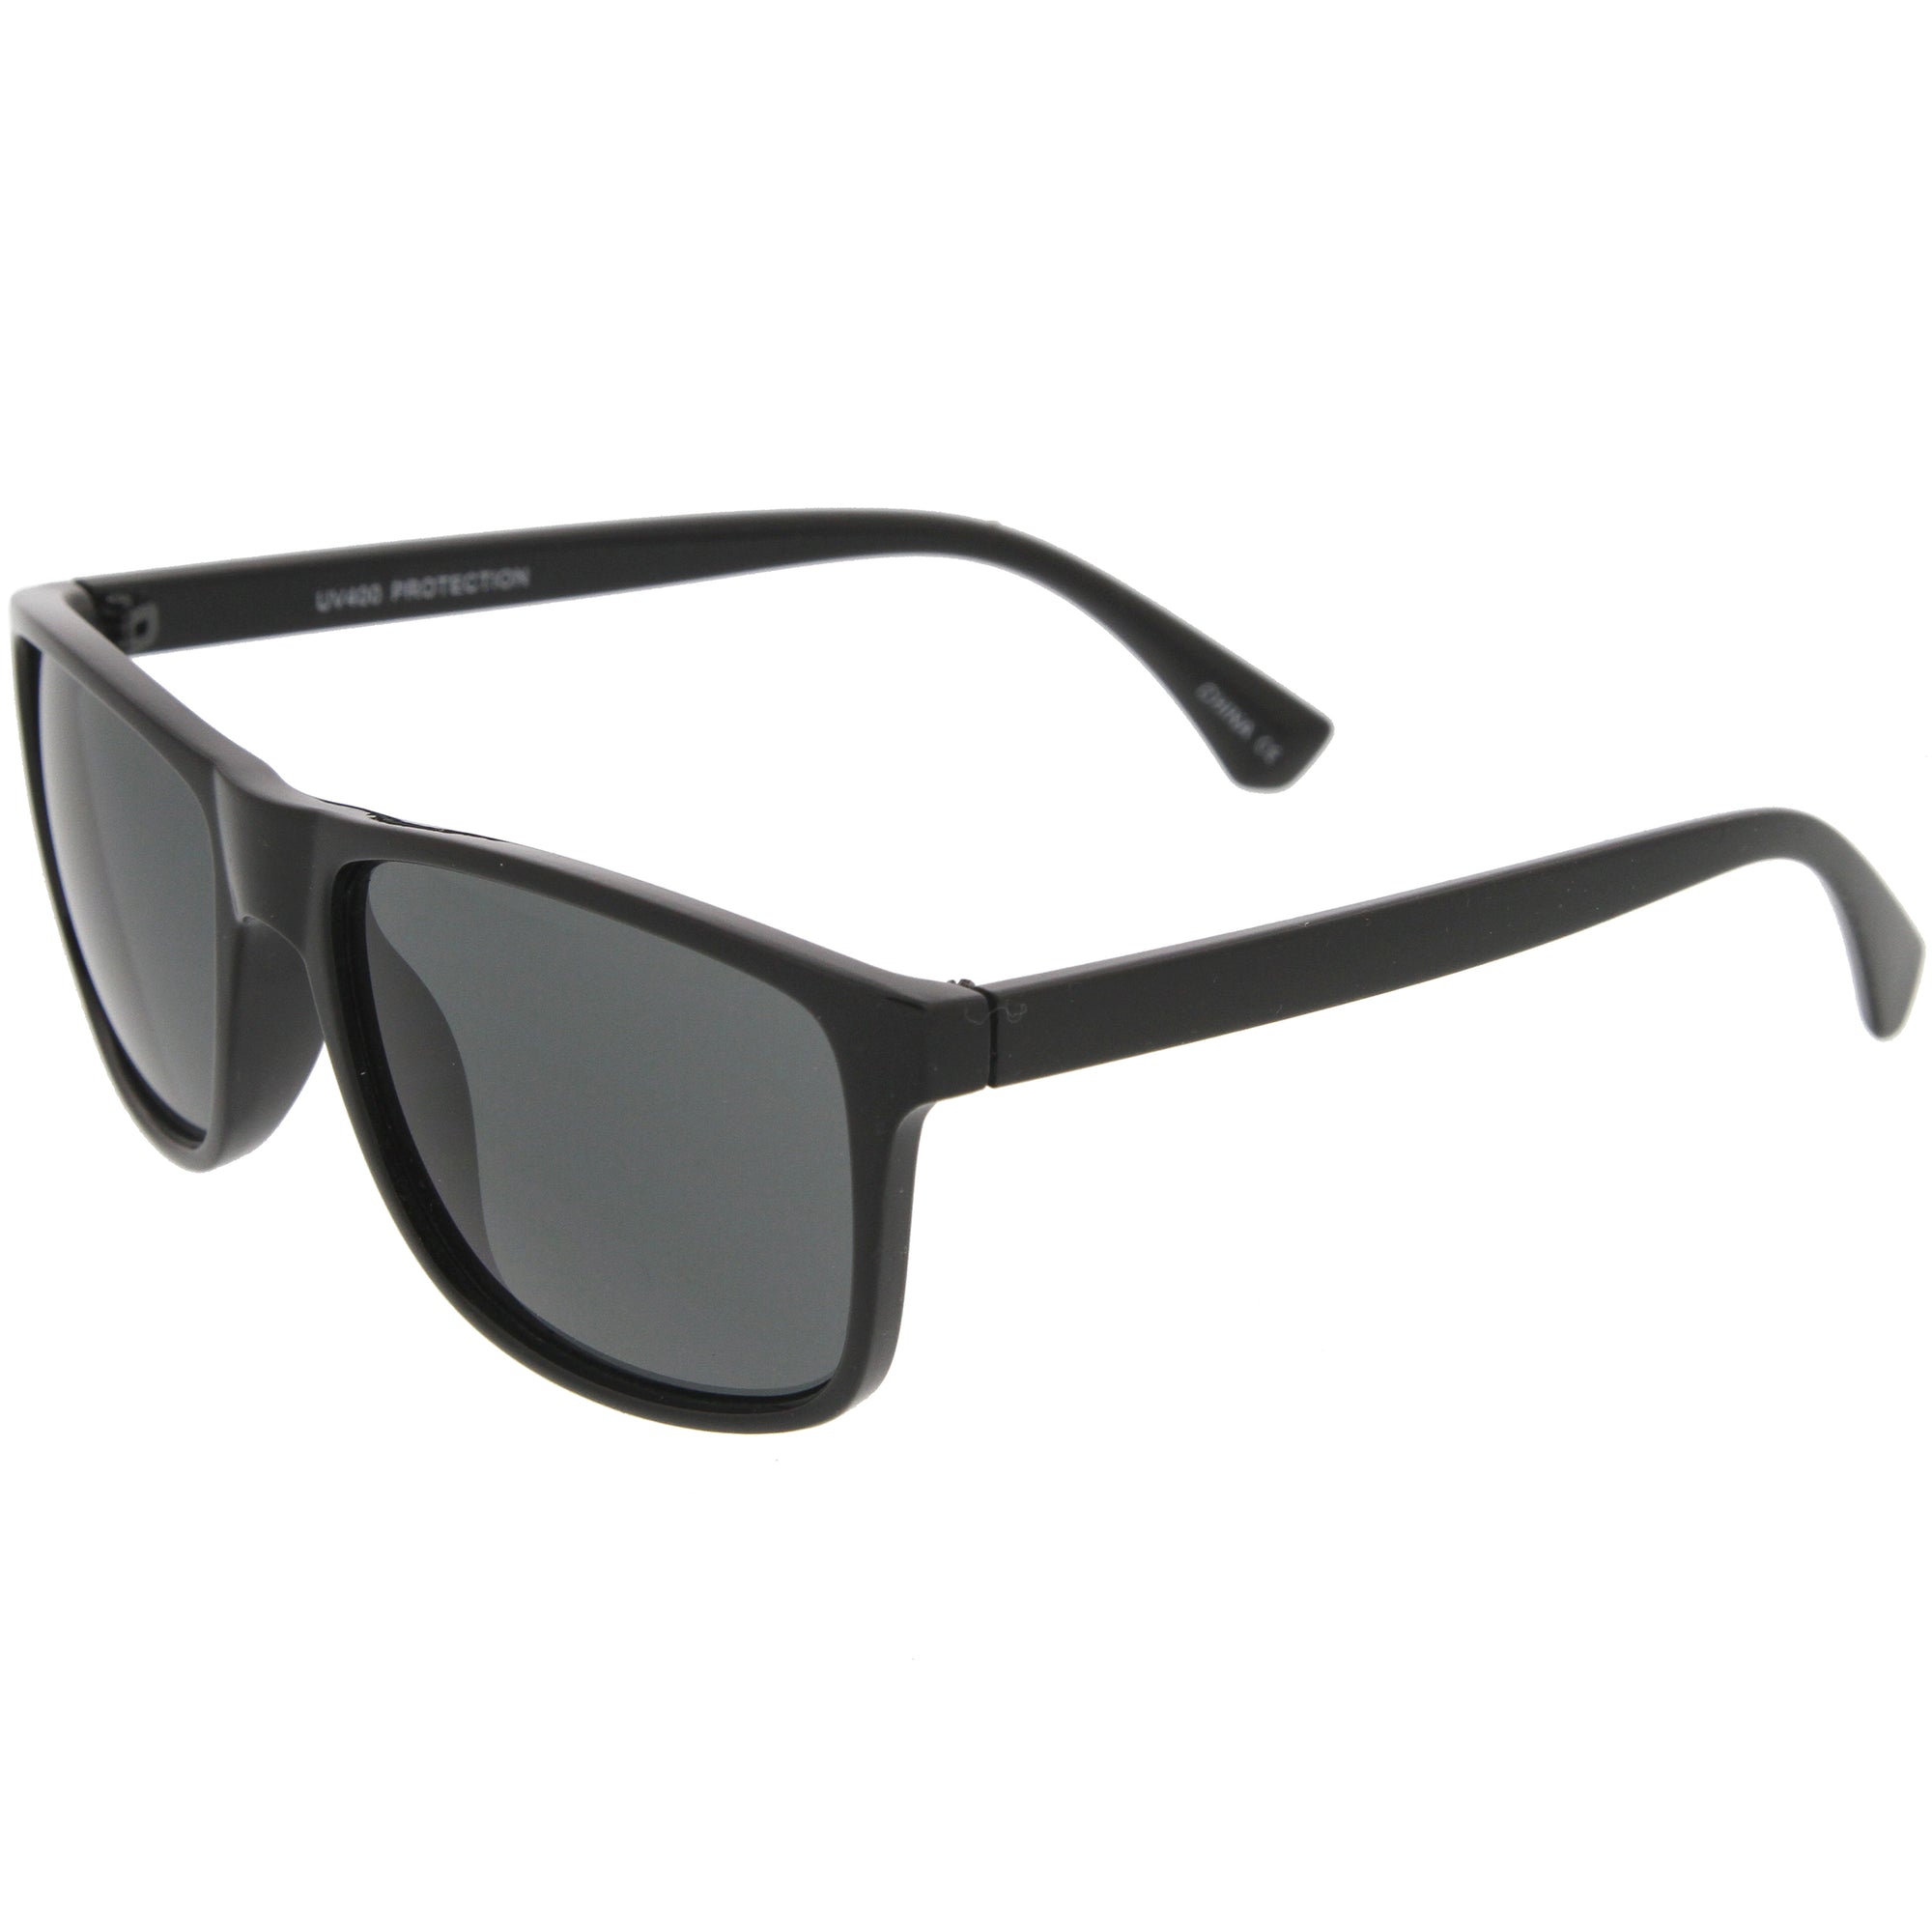 Men's Active Outdoors Square Aviator Sunglasses - zeroUV